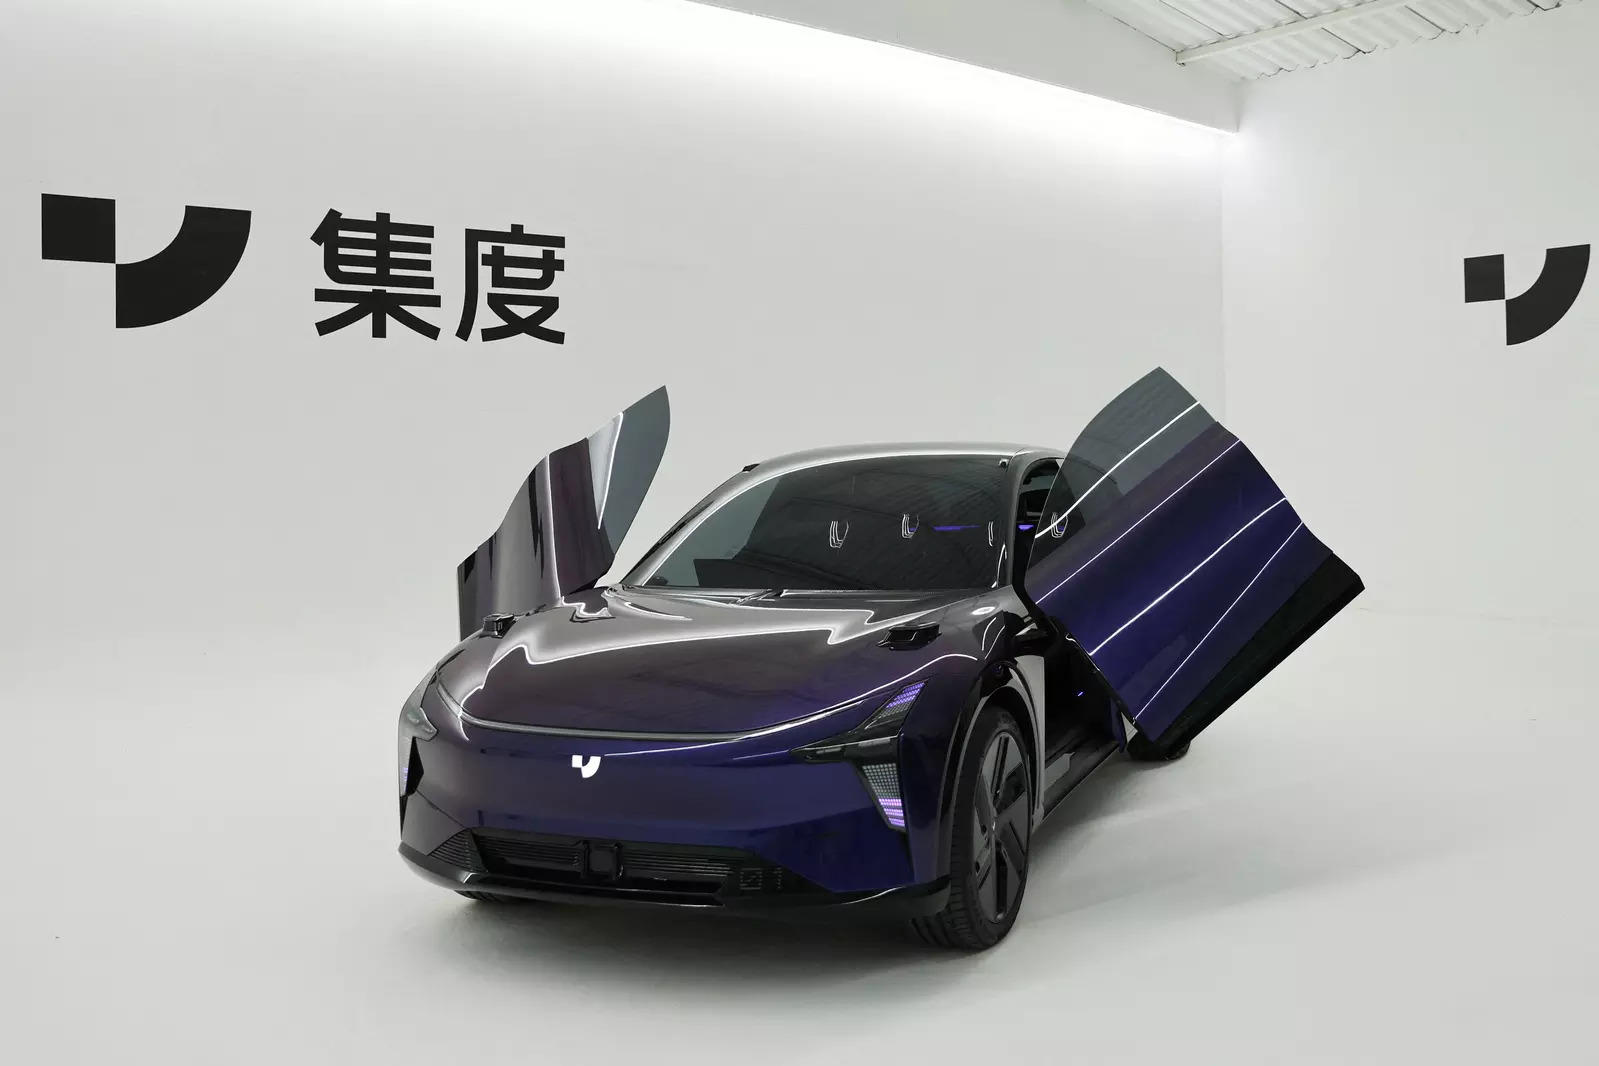 Chinese tech giant Baidu unveils its first robot car